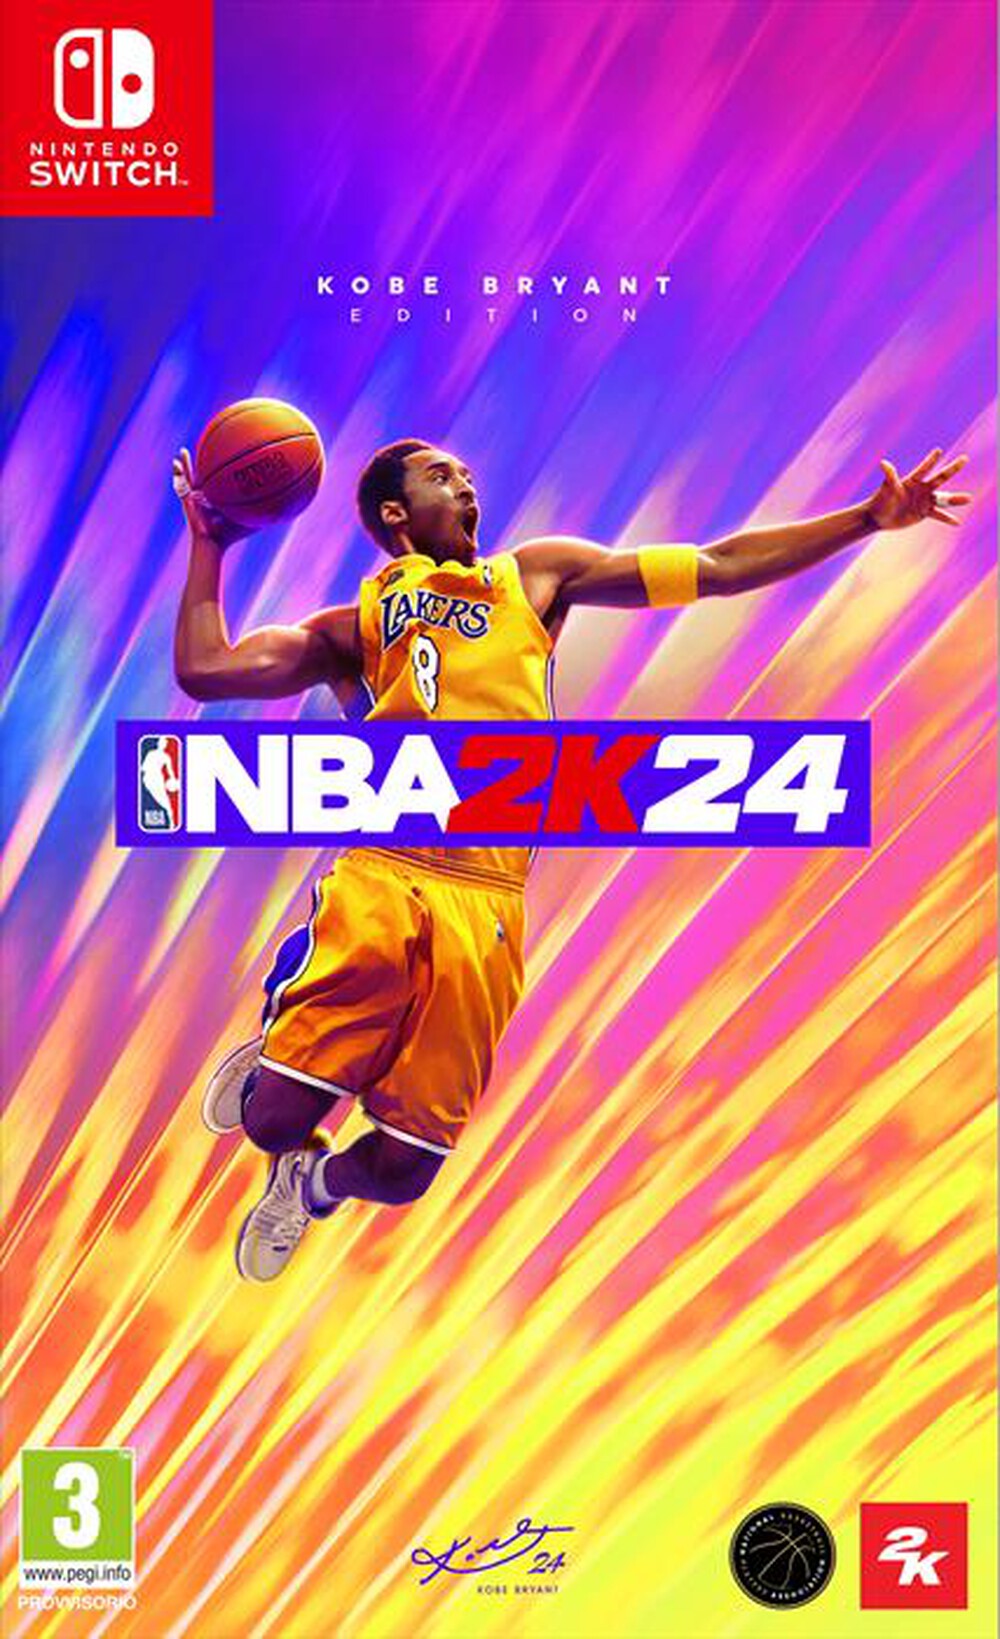 "2K GAMES - NBA 2K24 (KOBE BRYANT EDITION)"